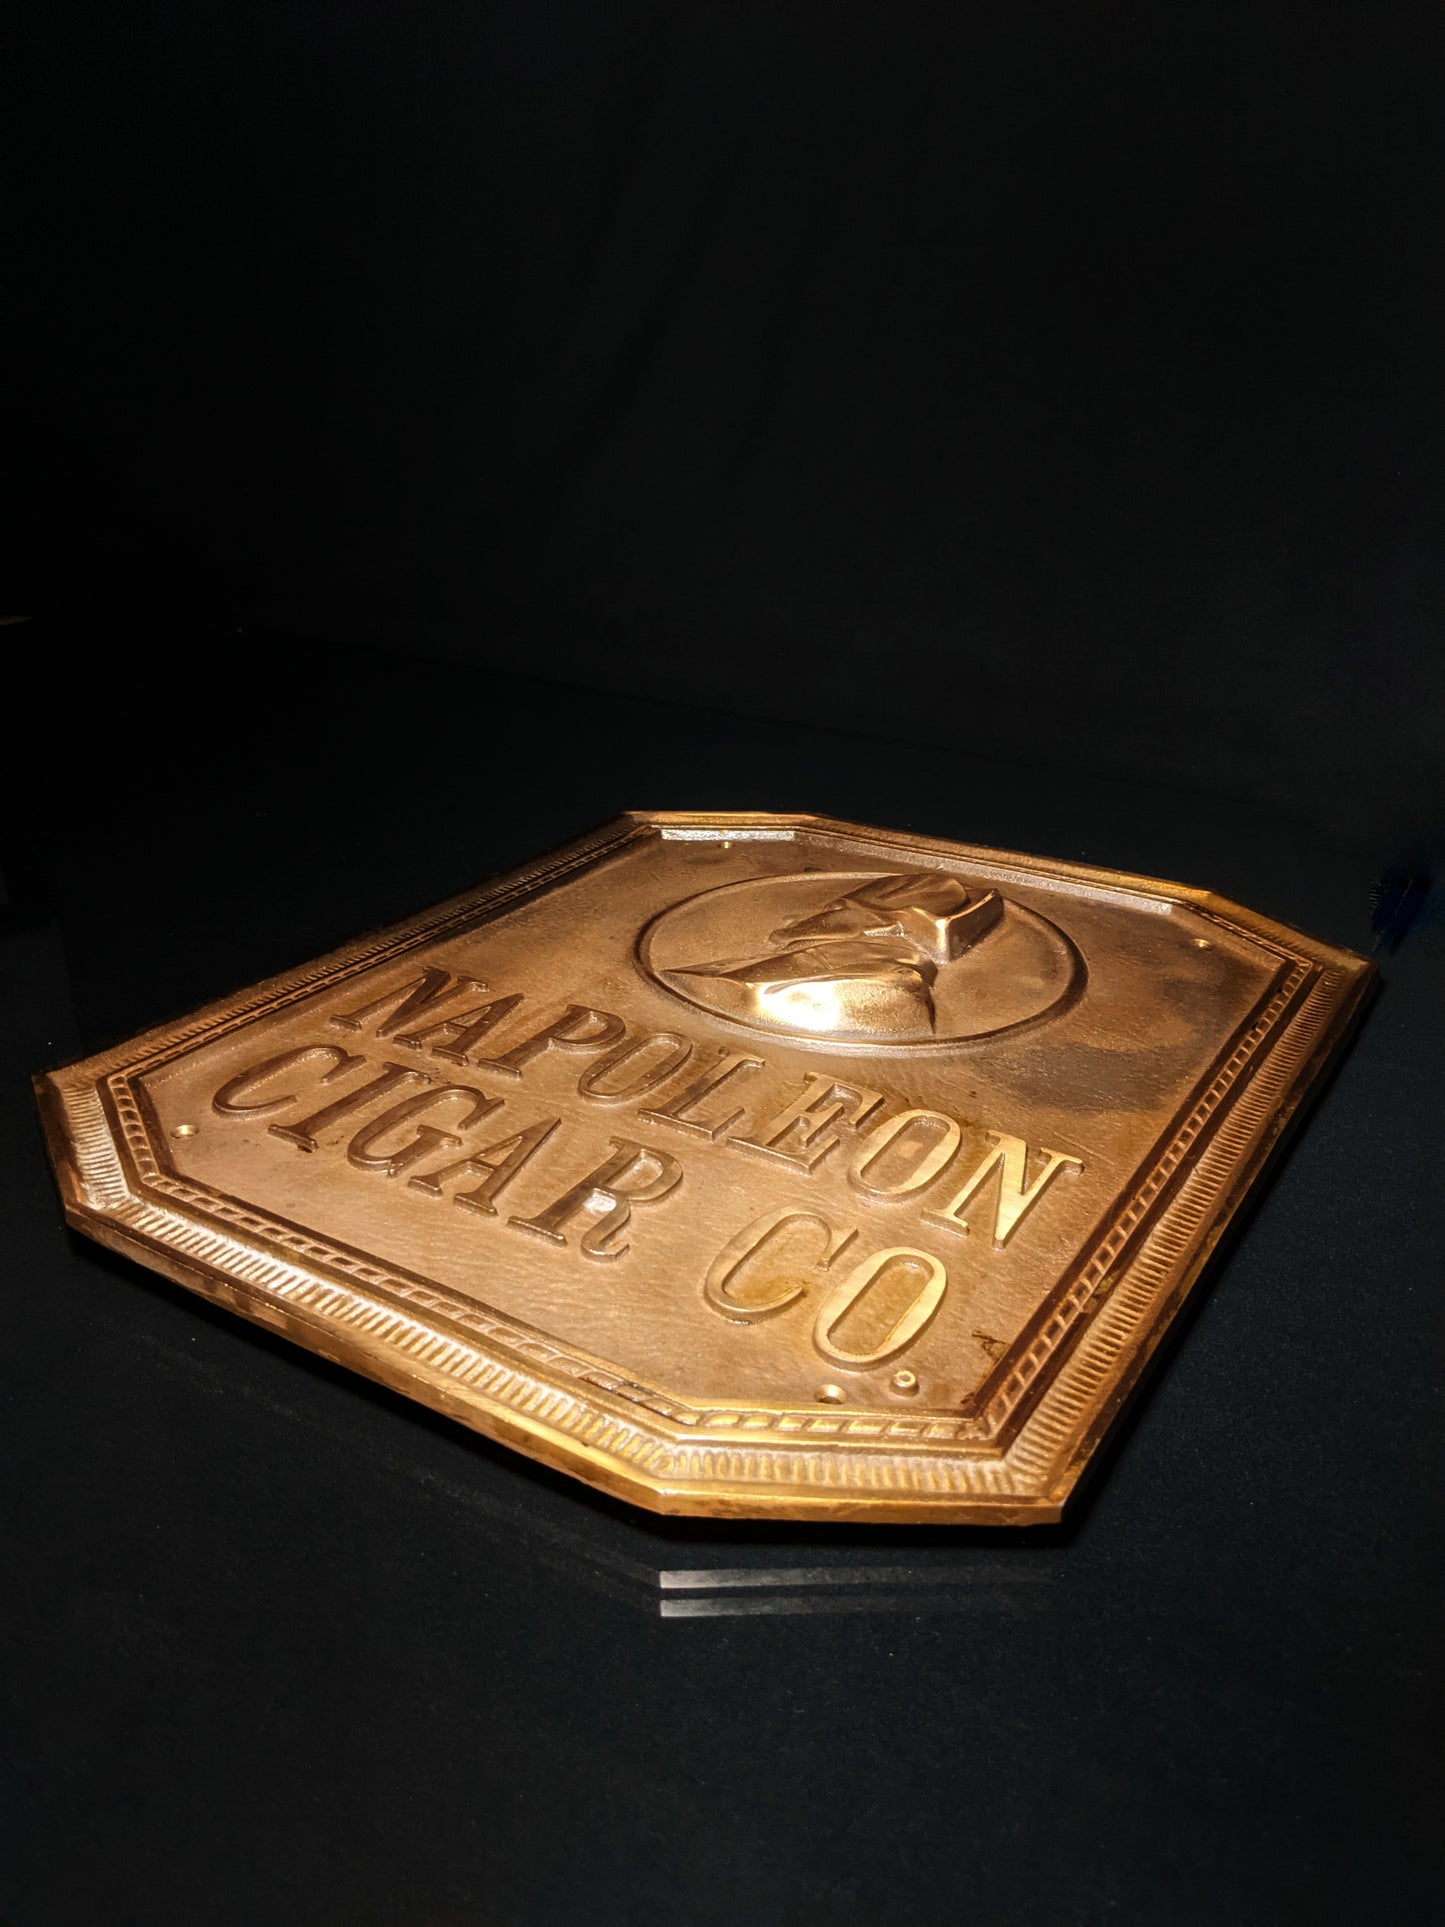 Napoleon Cigar Co. Bronze Sign 15.75" H x 12.75" W